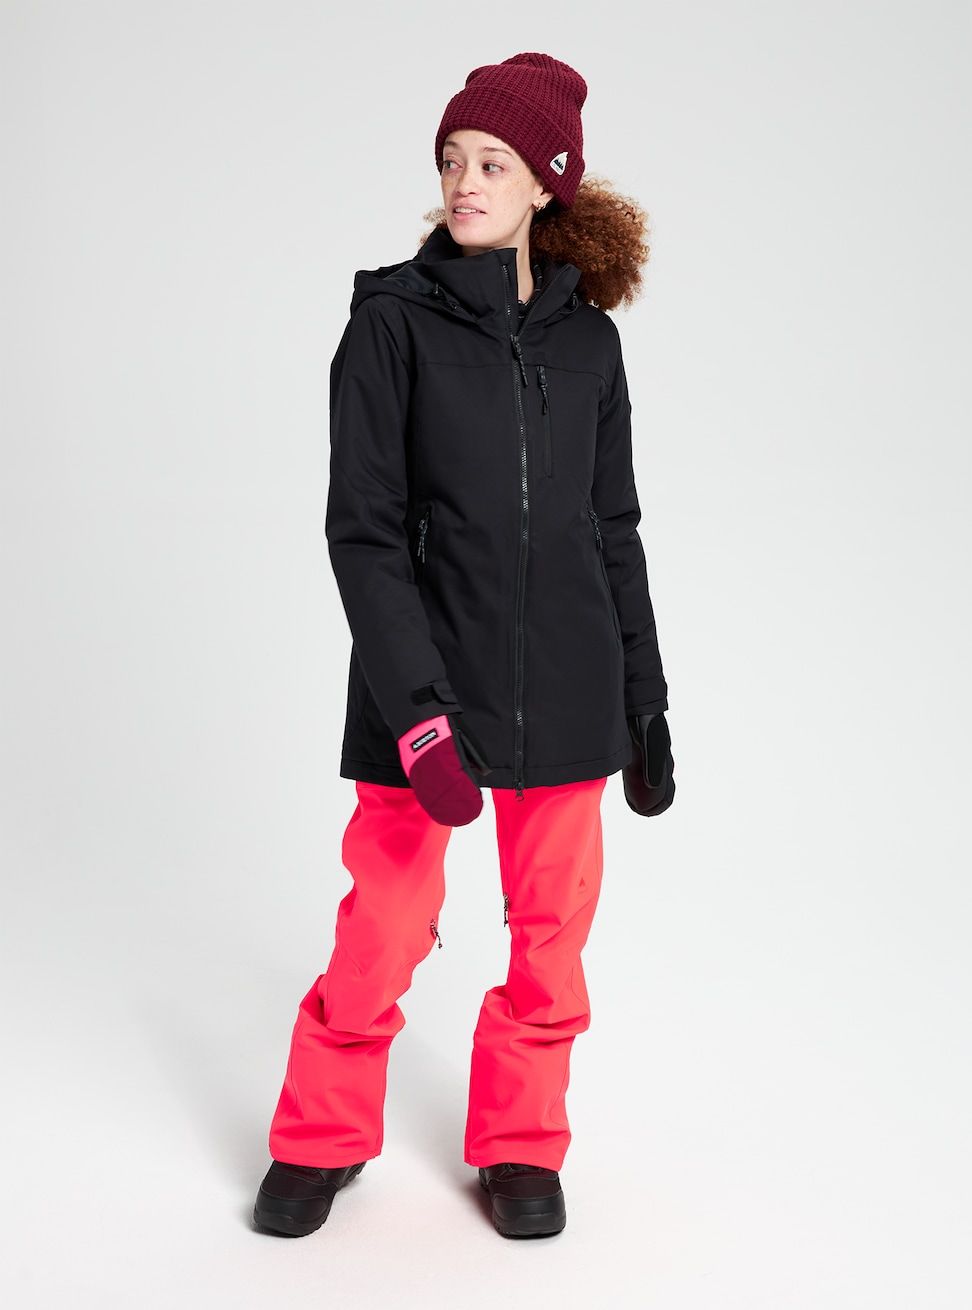 Women's Burton Lelah 2L Jacket True Black Snow Jackets